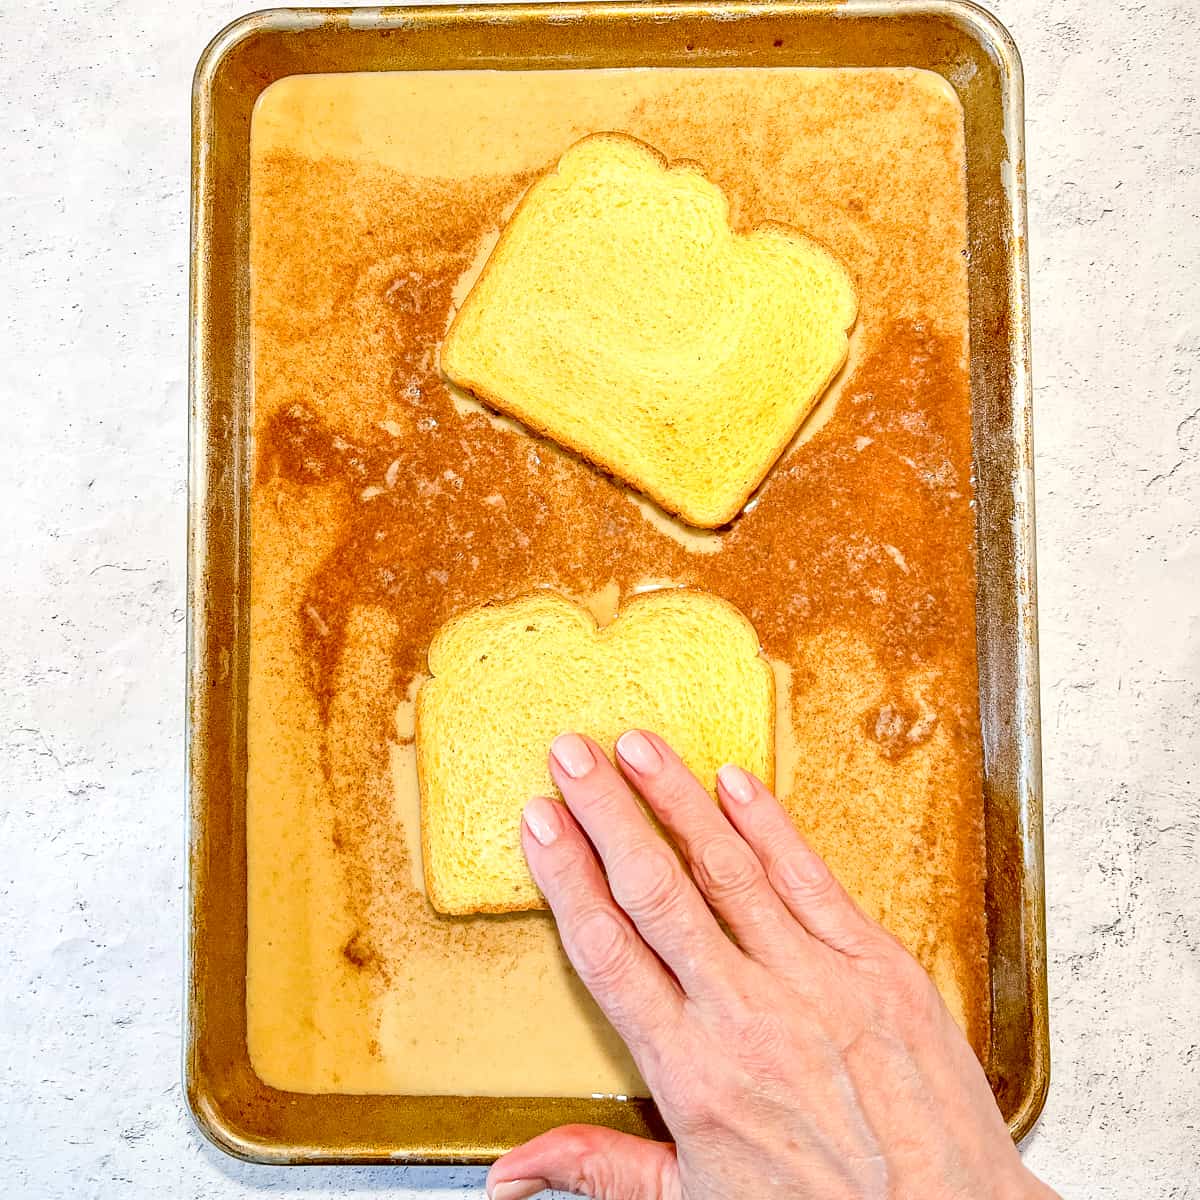 soaking bread in french toast custard.